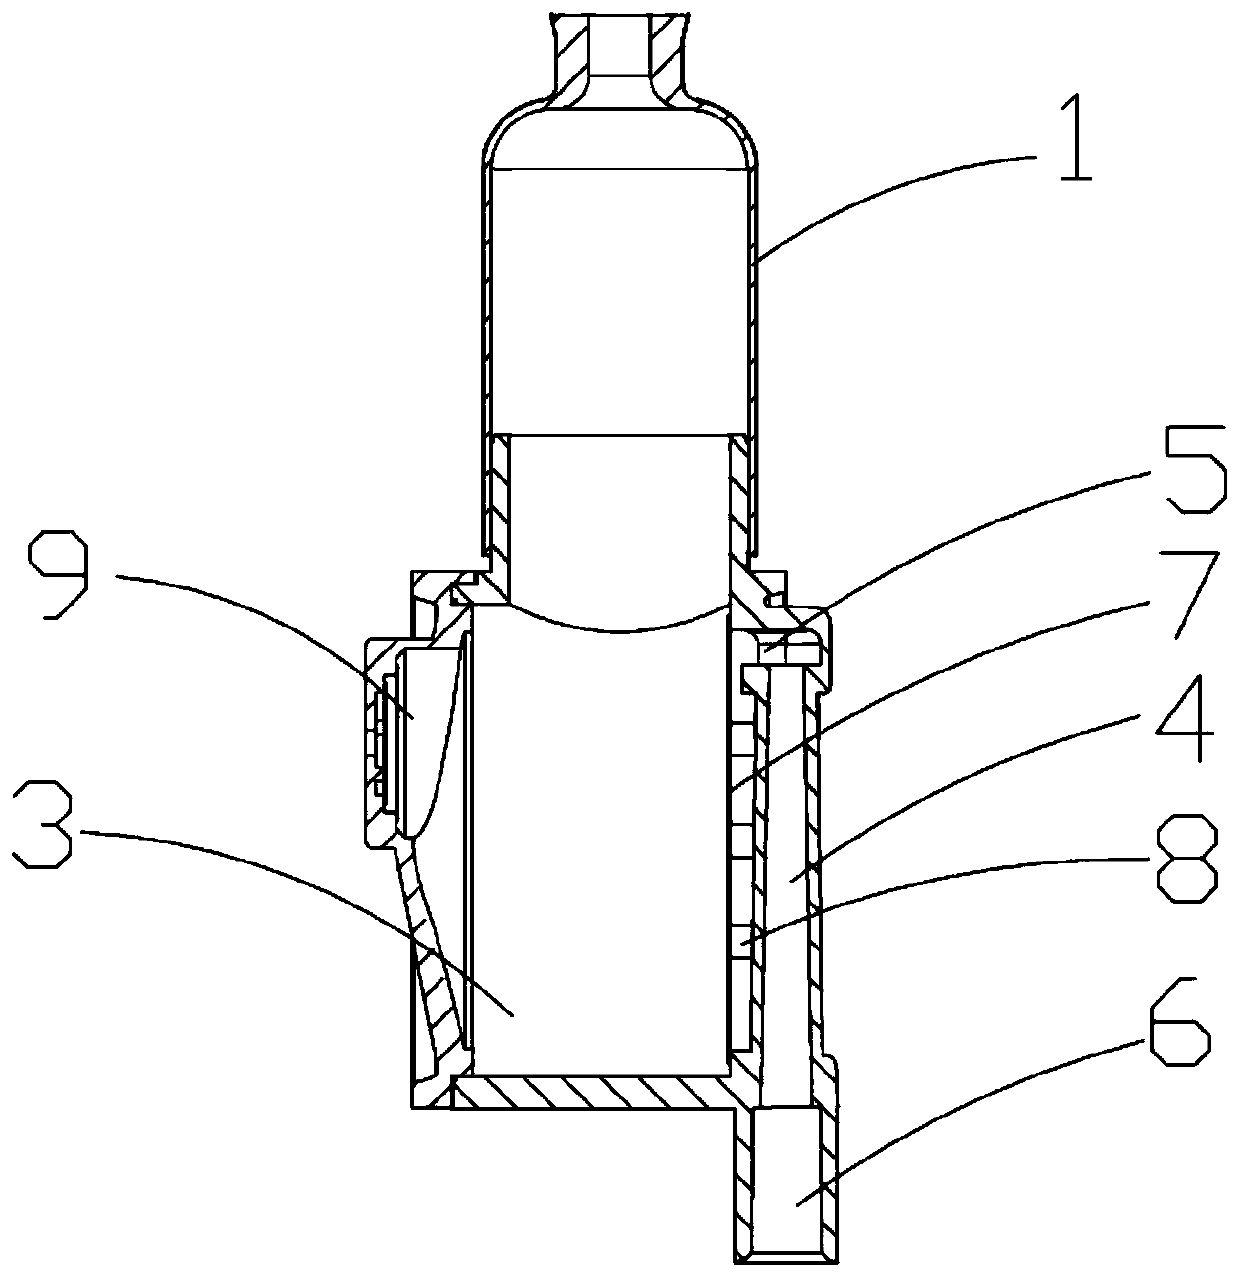 Anti-bubble infusion drip chamber